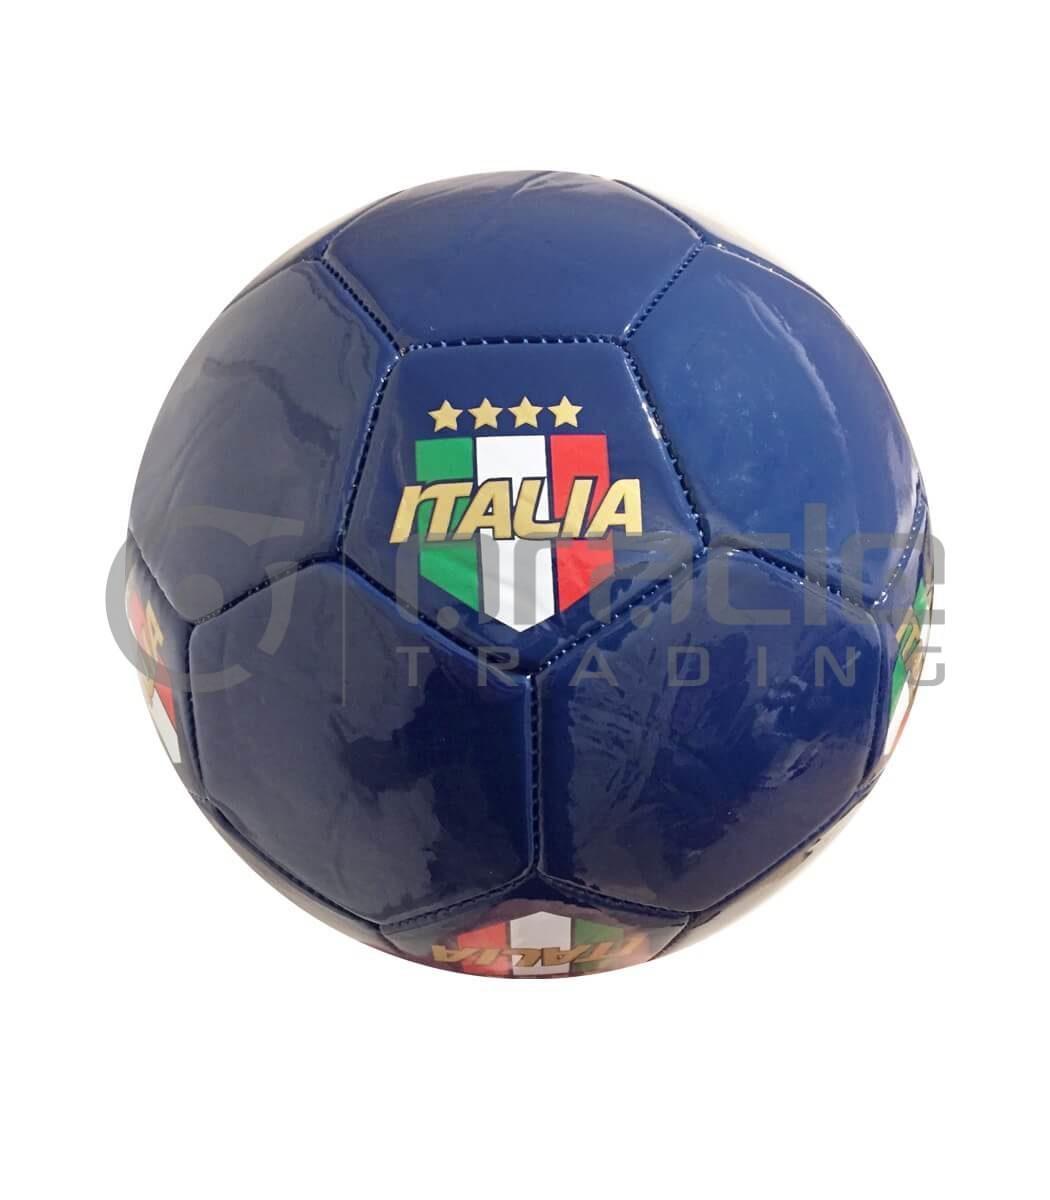 Italia Large Soccer Ball - Blue